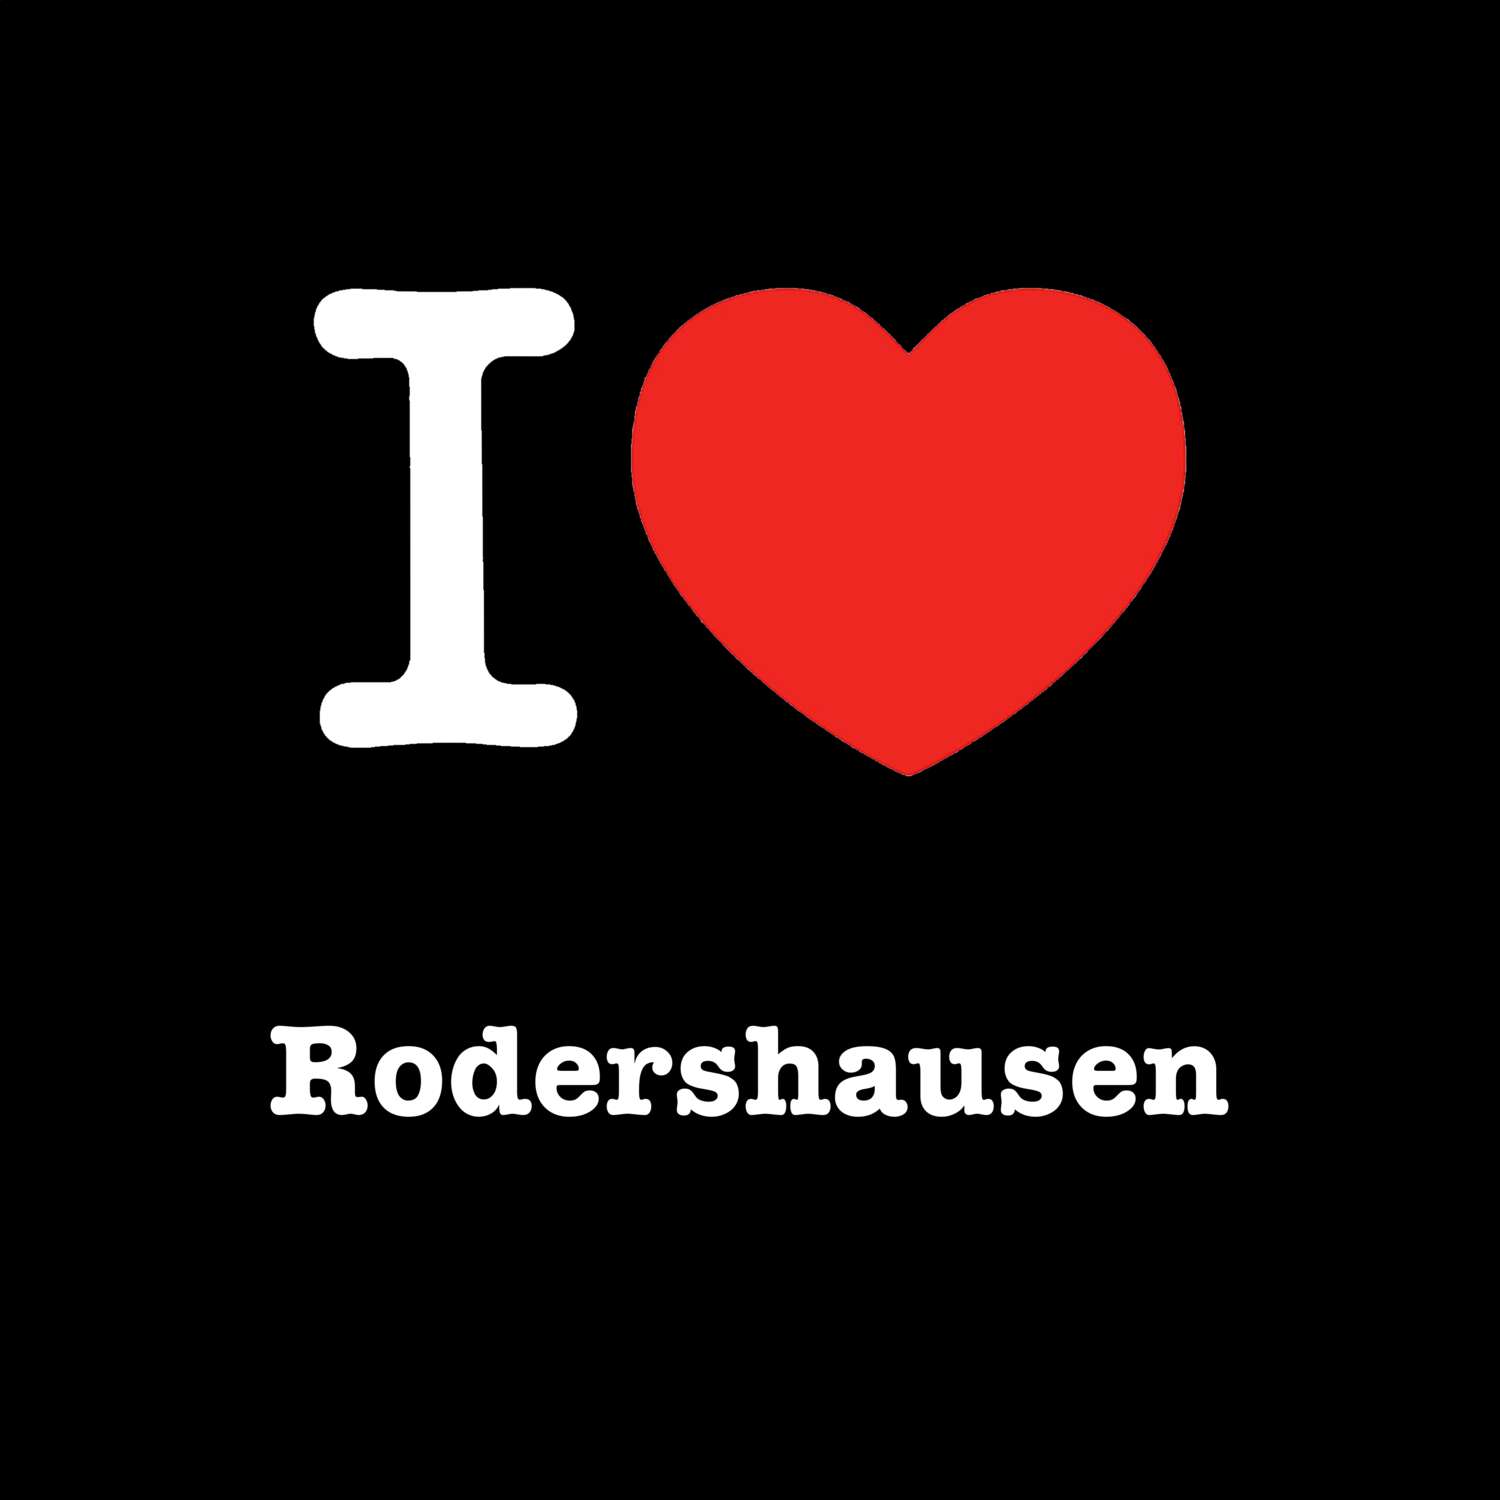 Rodershausen T-Shirt »I love«